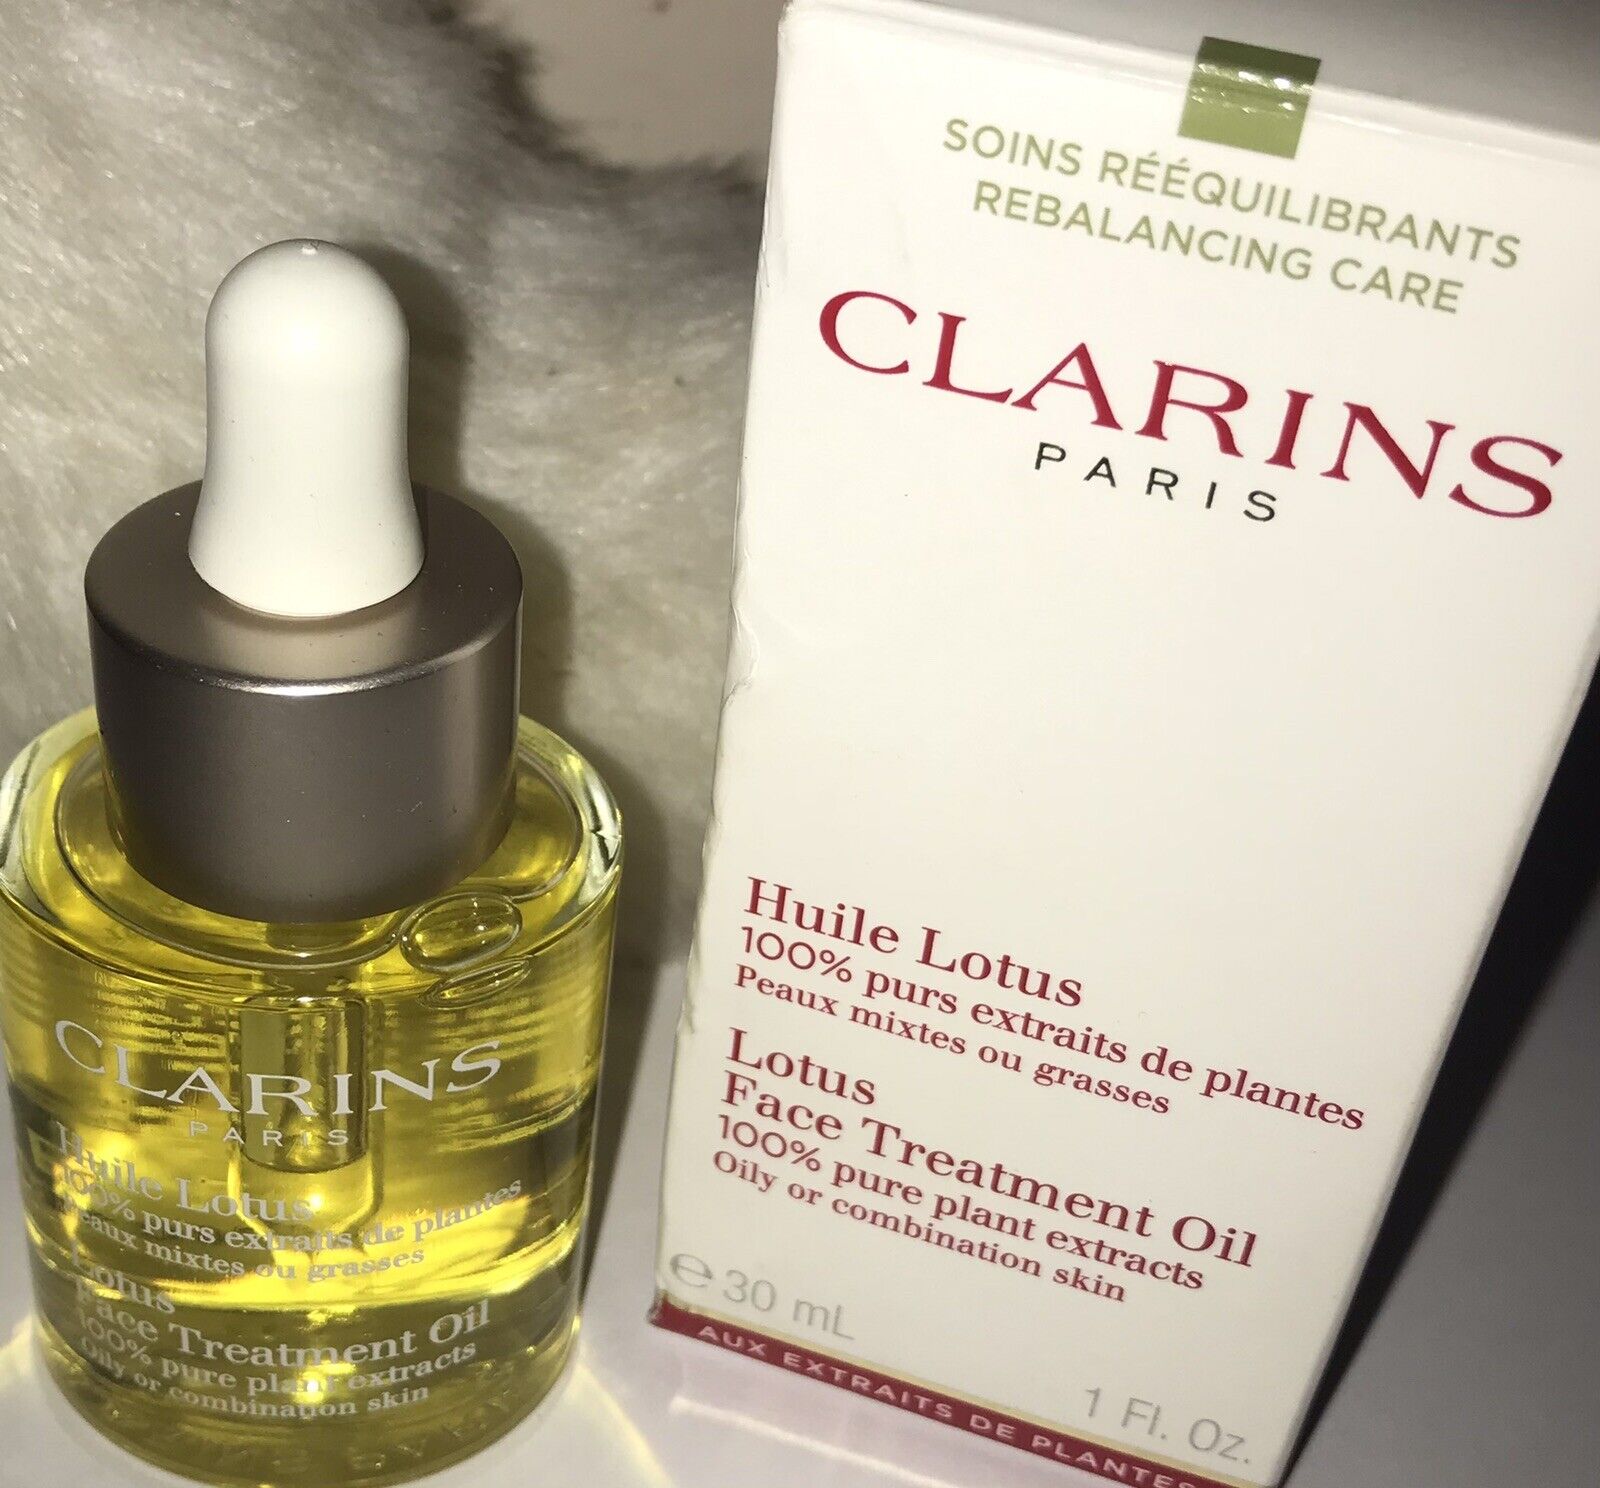 Clarins Face Treatment Oil Lotus Oily or Combination Skin 1.0oz. Moisturizer